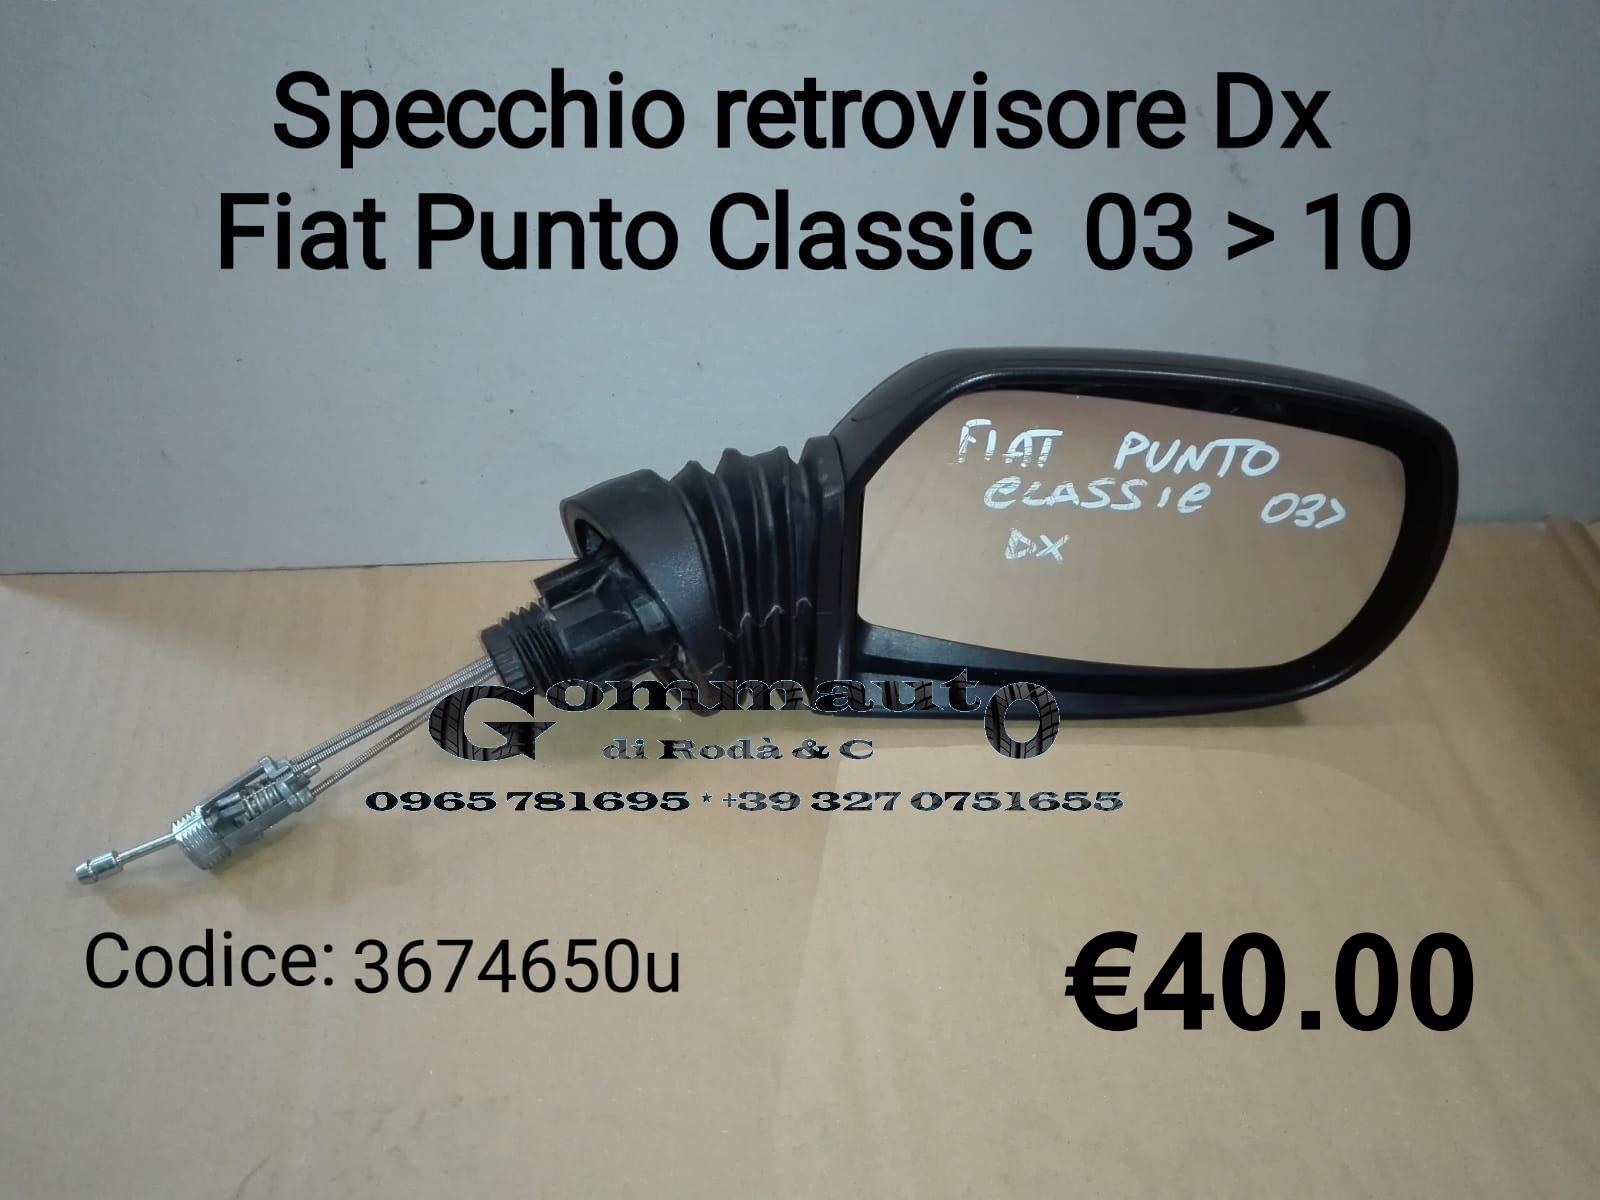 PIASTRA SPECCHIO RETROVISORE C/VETRO DX TERM FIAT PUNTO 03> DAL 2003 IN POI 